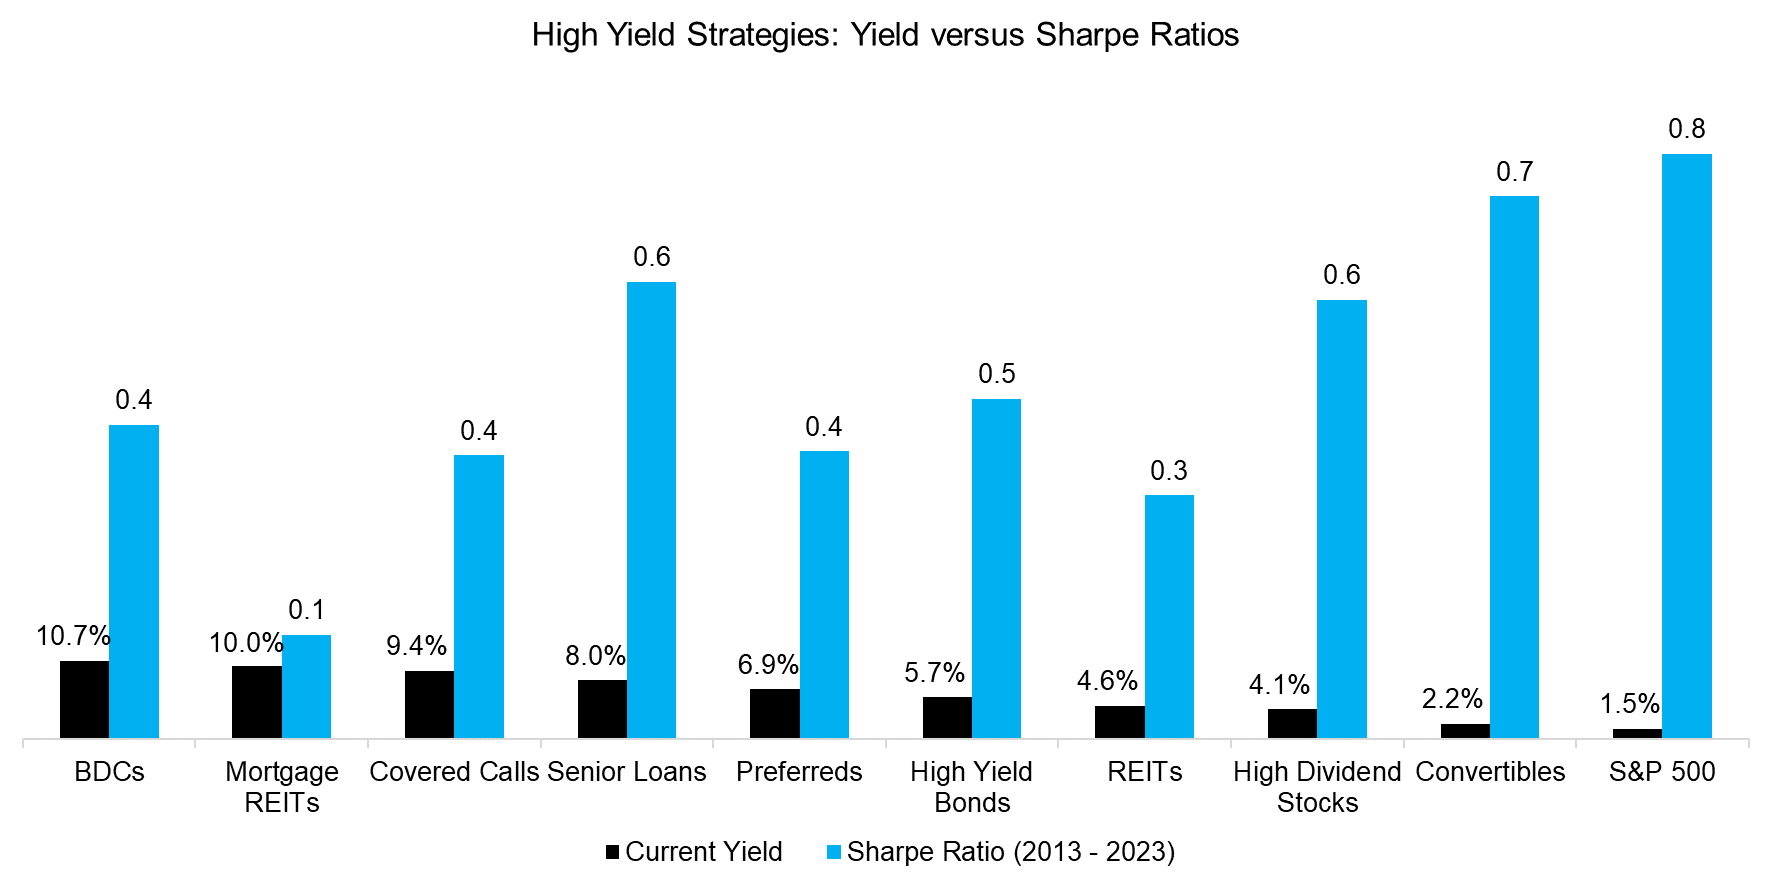 High Yield Strategies Yield versus Sharpe Ratios